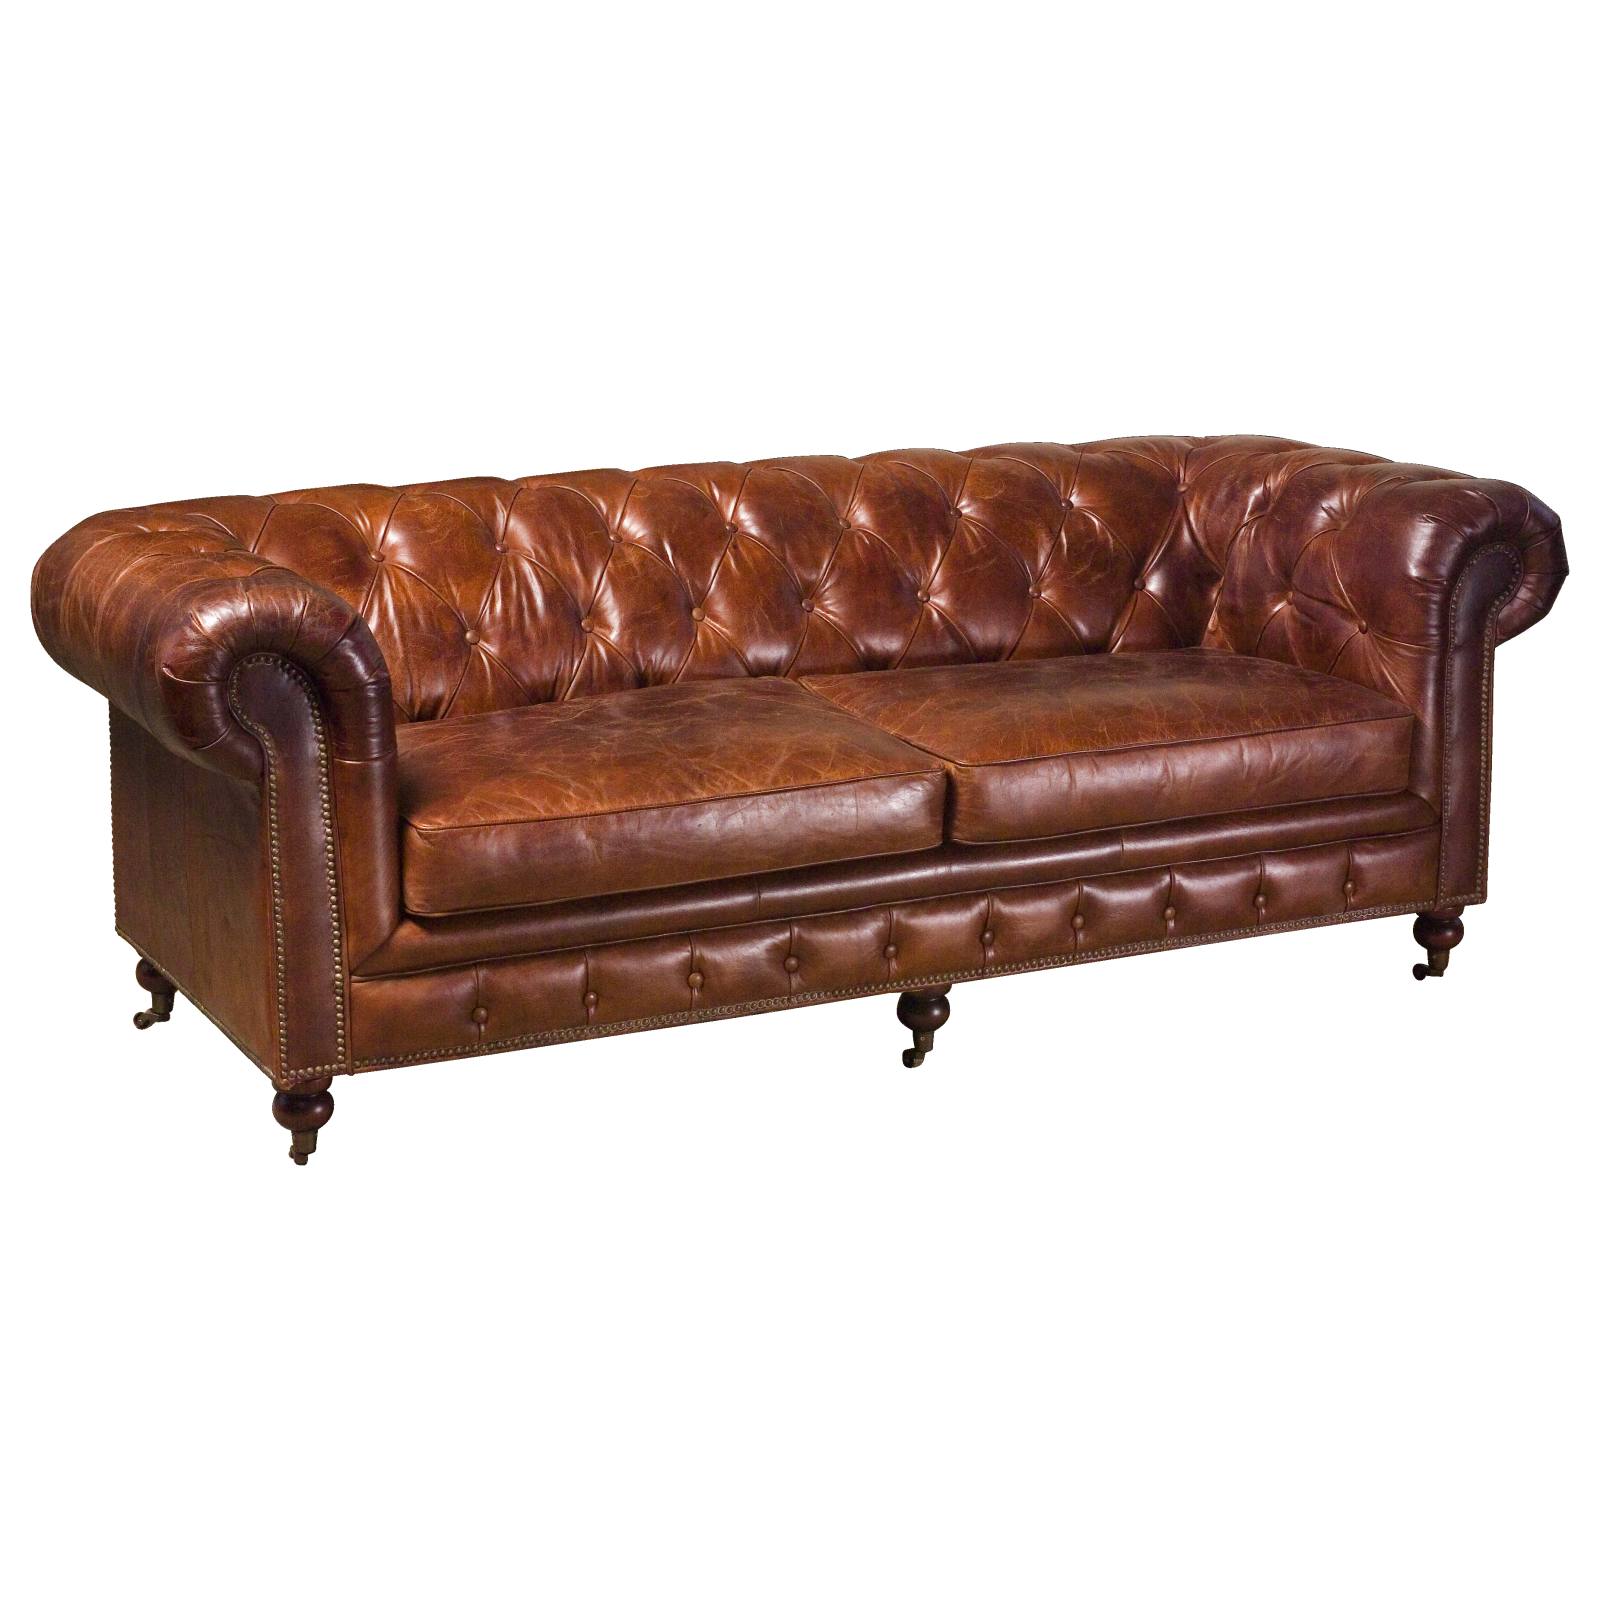 Sheffield 3 Seater Leather Sofa, Vintage Cigar